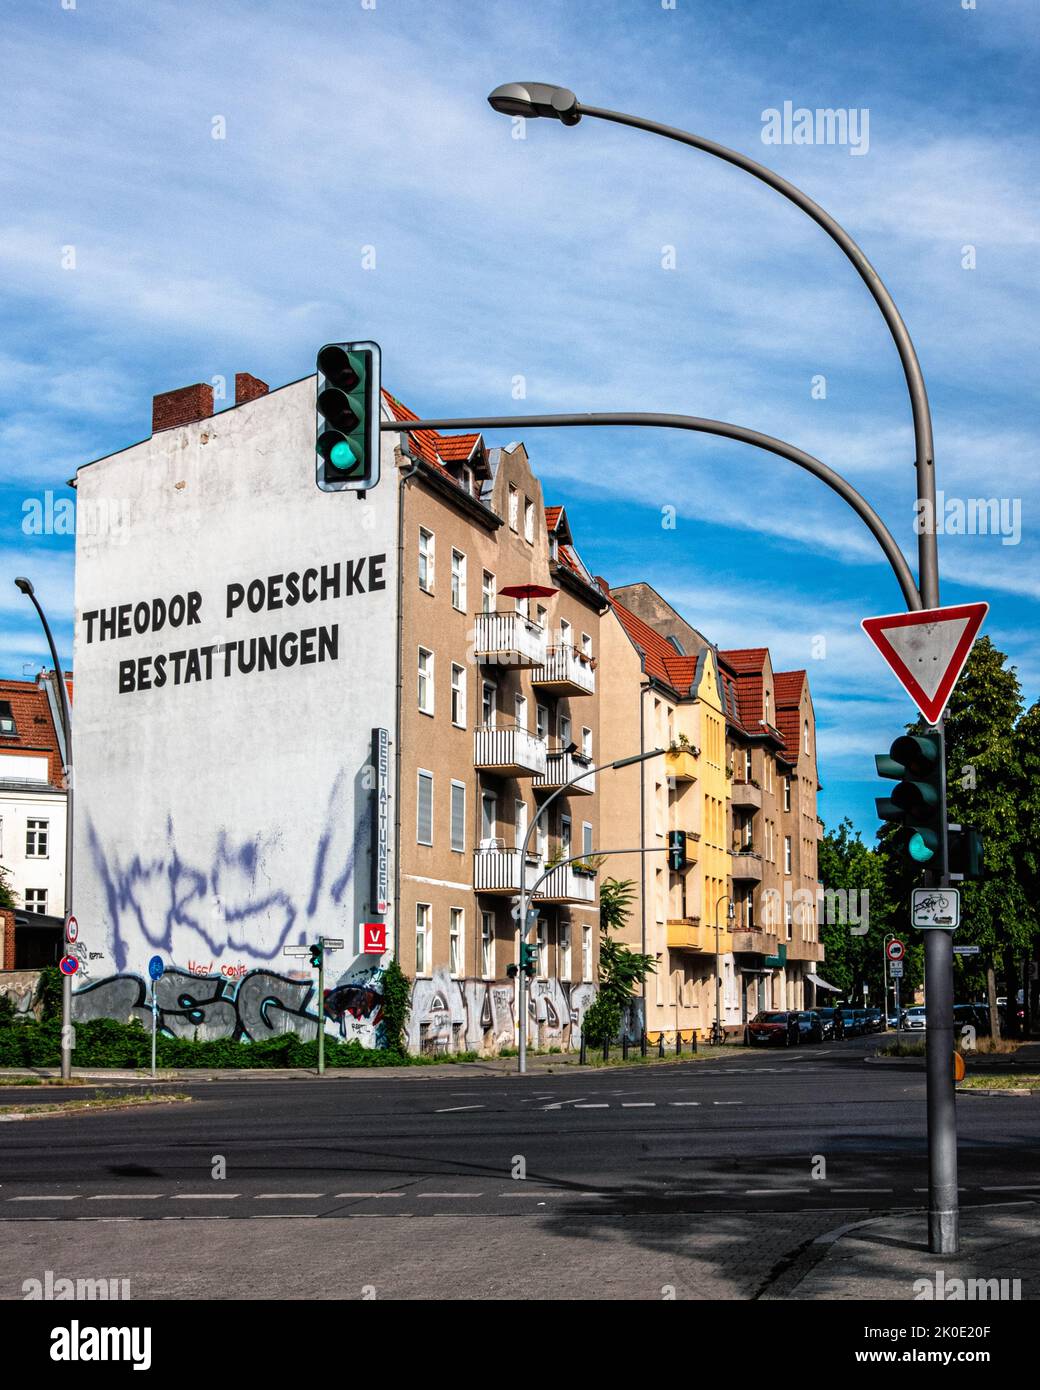 Theodor Poeschke Bestattungen advertisement on firewall of apartment building, Alt-Reinickendorf street, Berlin,Germany Stock Photo